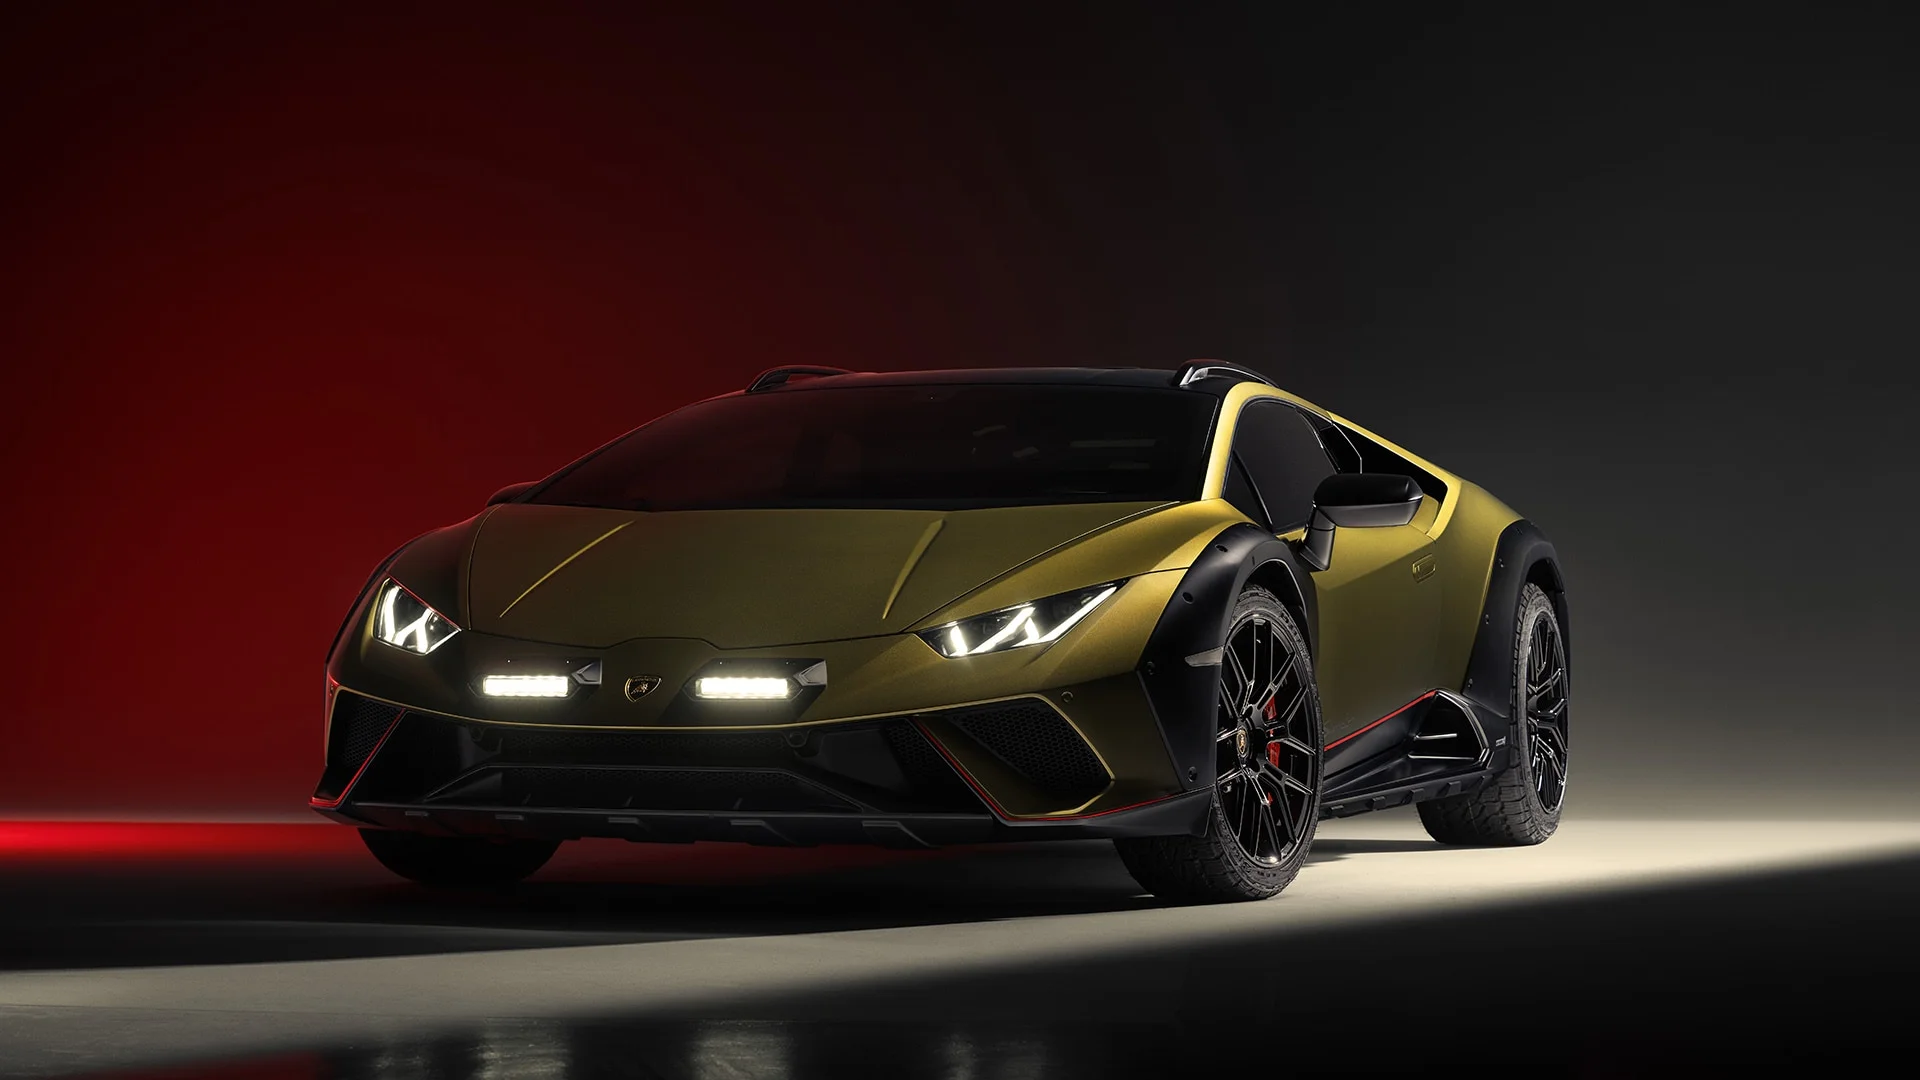 Lamborghini presented a hypercar for off-road